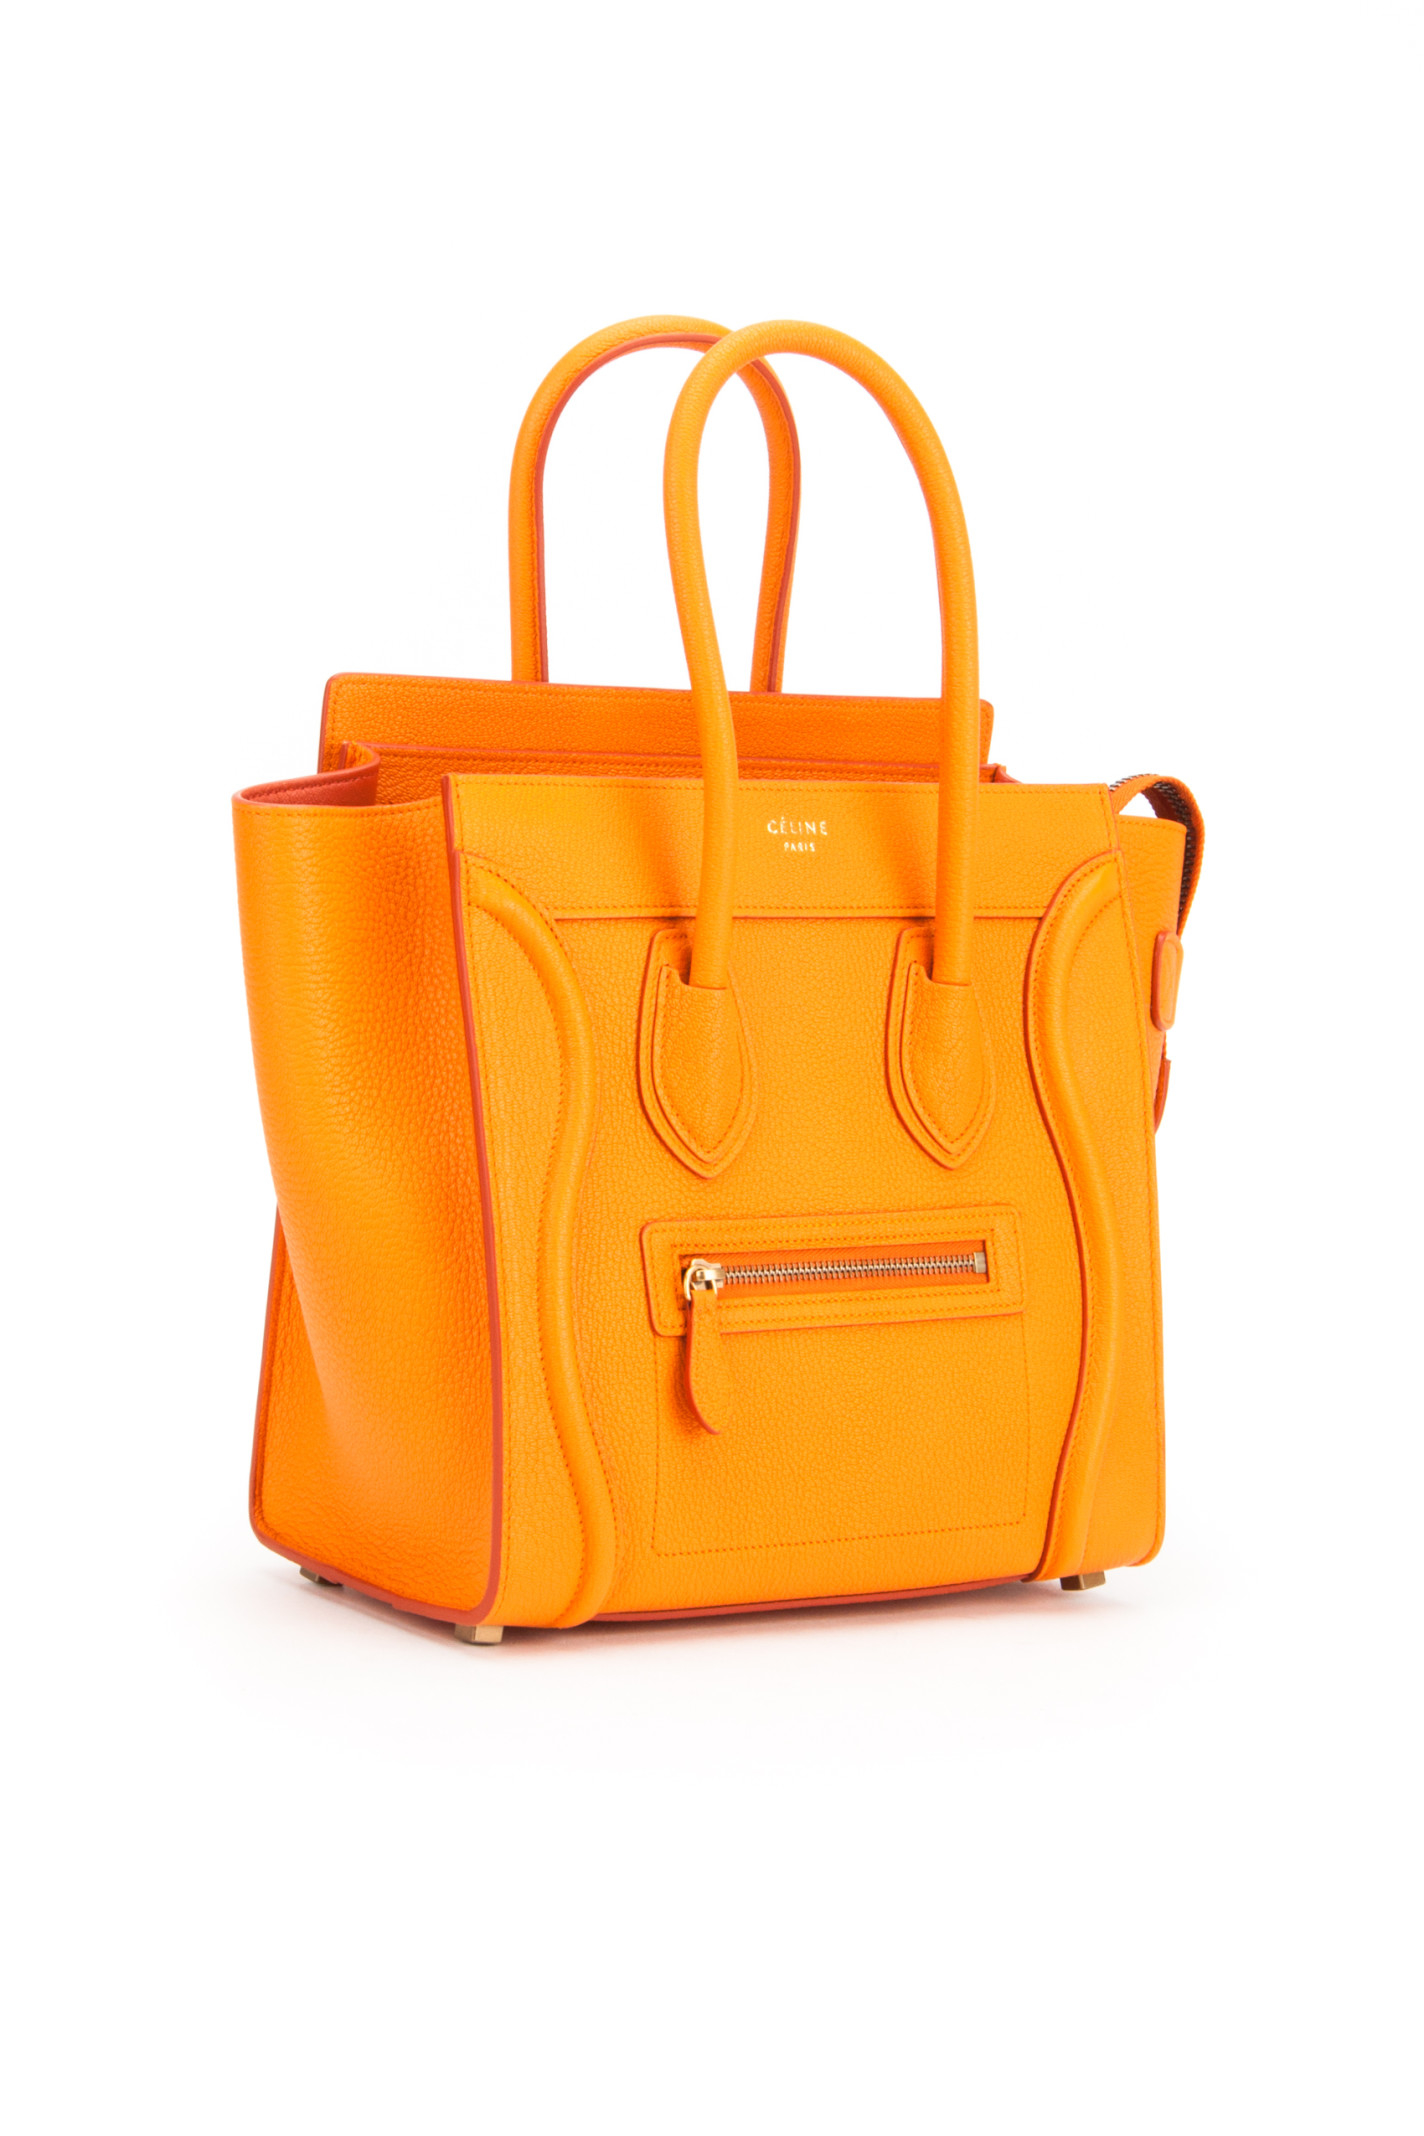 celine-light-orange-micro-luggage-bag-orange-product-3-549783163-normal.jpeg  